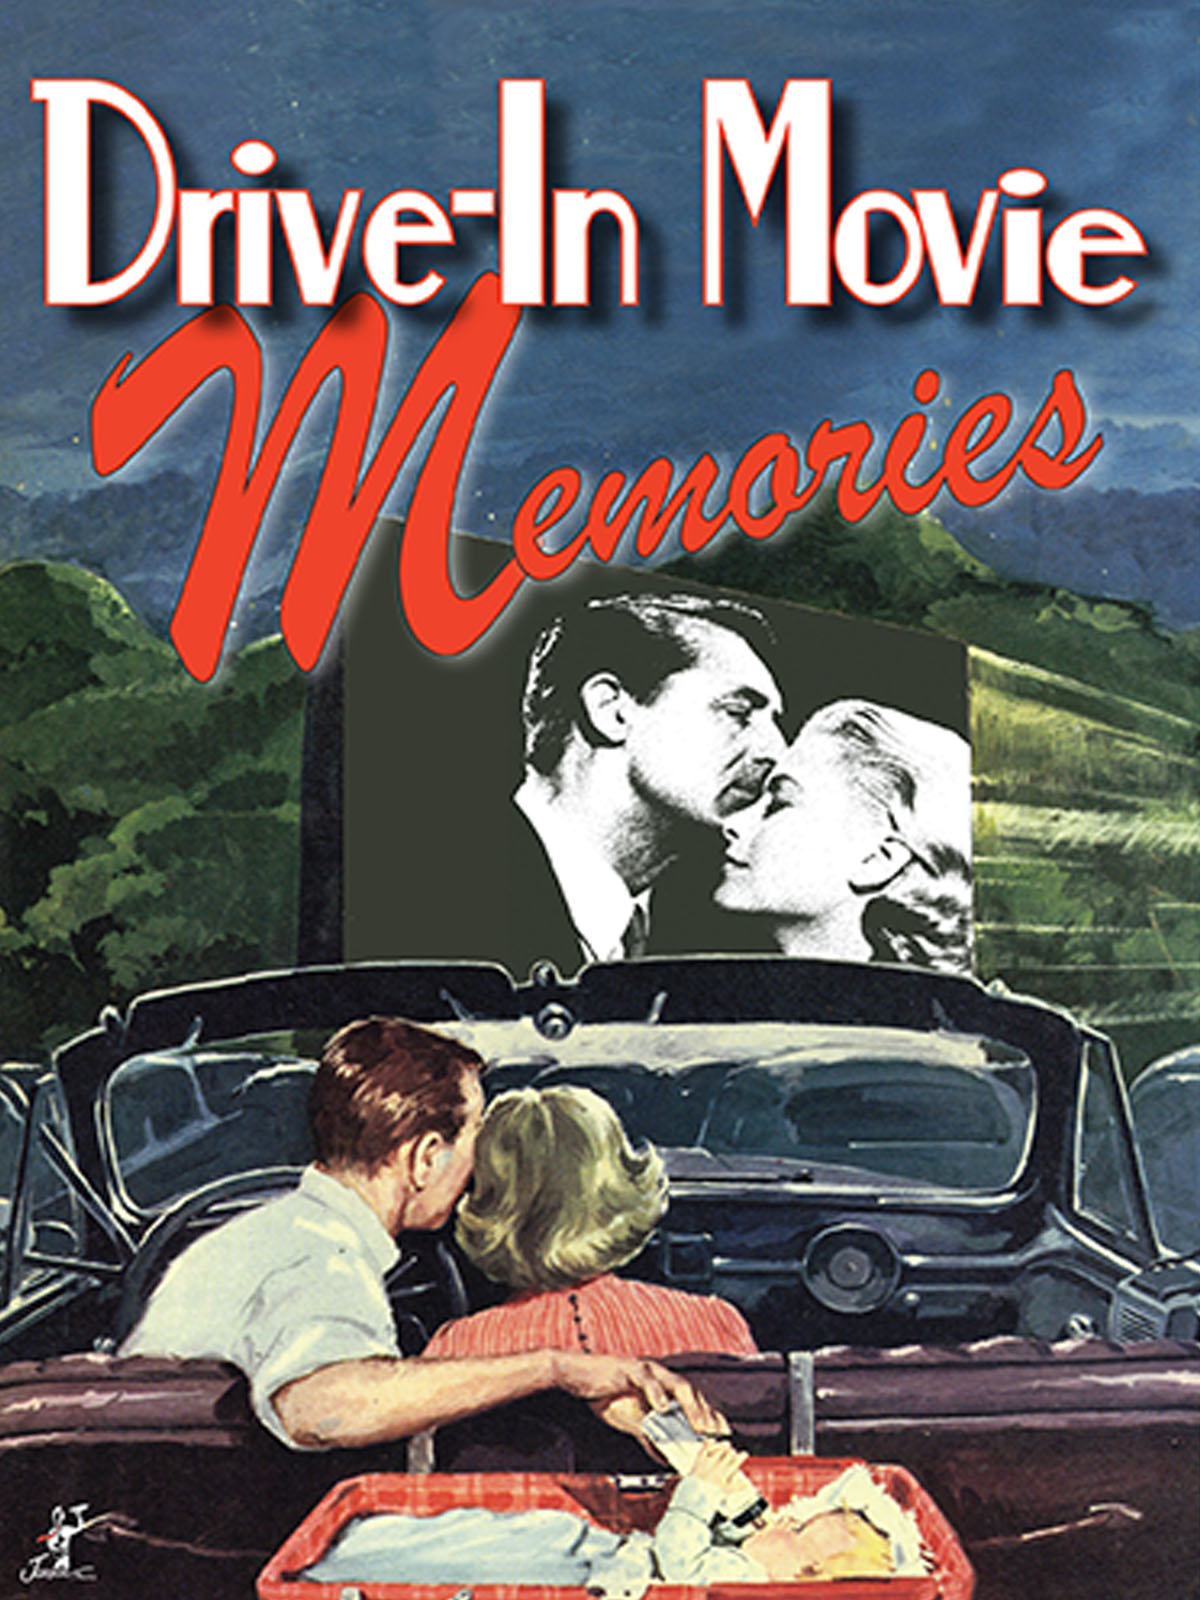 Drive-in Movie Memories (2001) Screenshot 2 